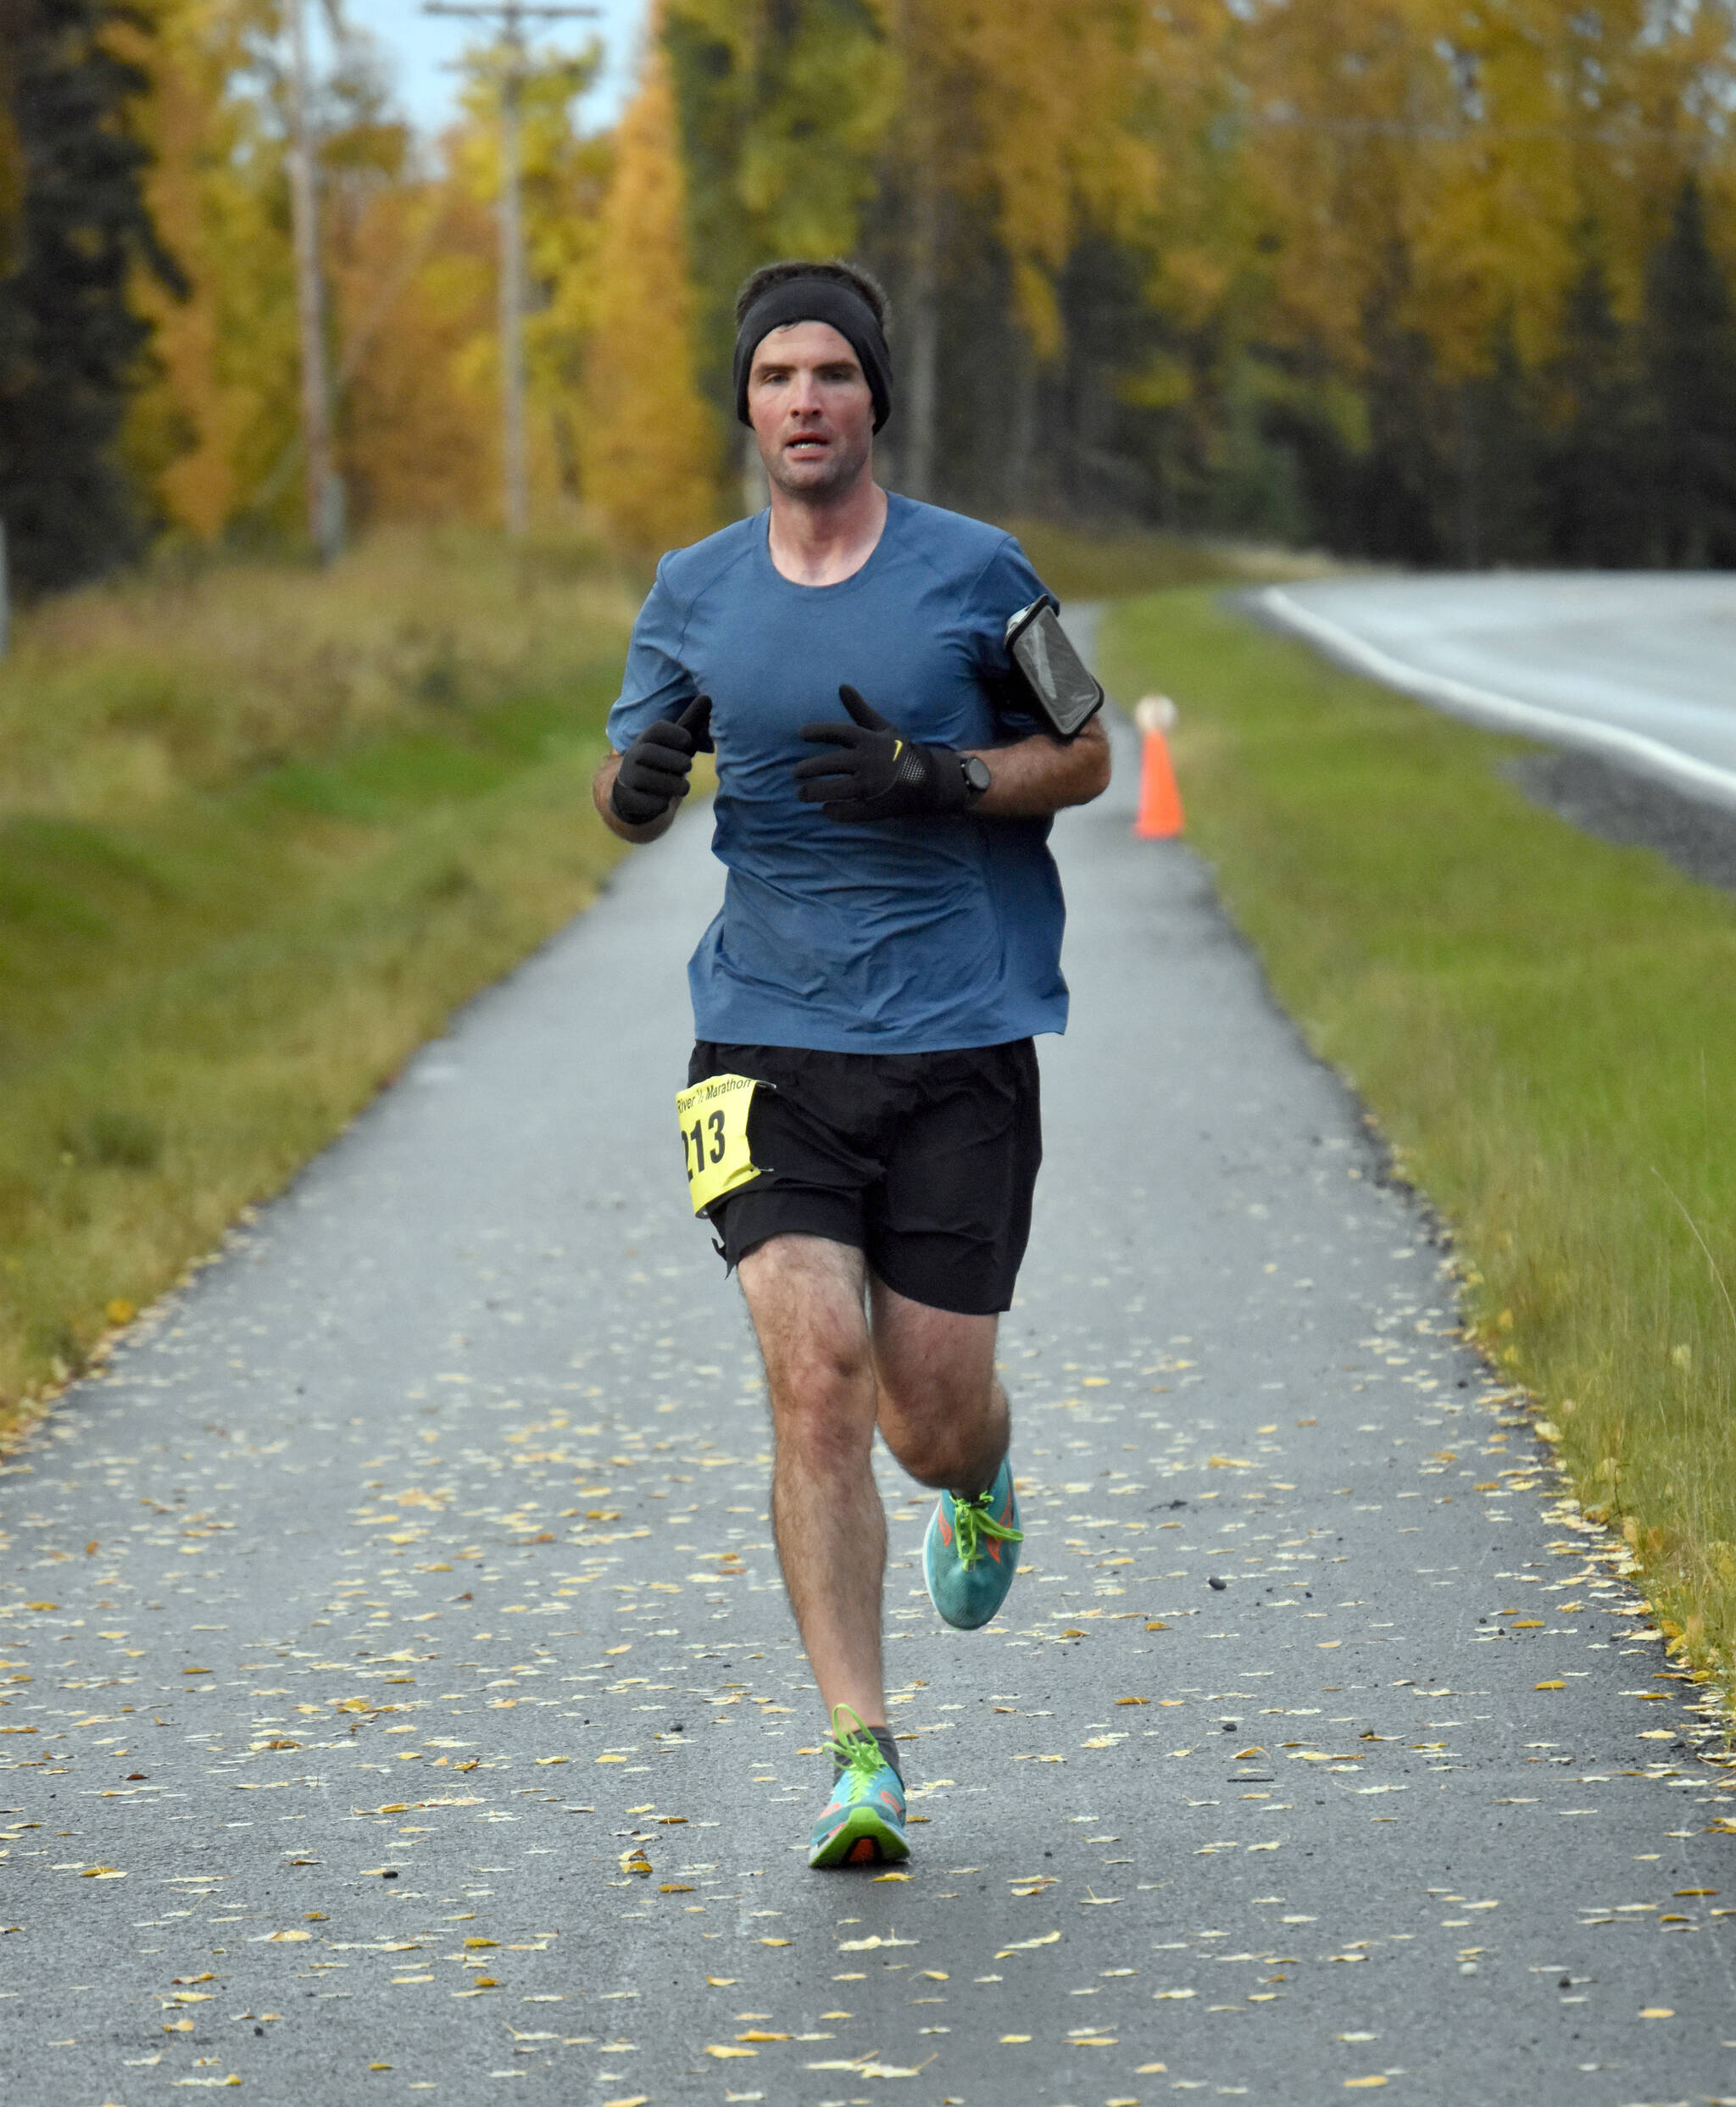 Lee Frey runs to victory in the men’s half marathon at the Kenai River Marathon on Sunday, Sept. 25, 2022, in Kenai, Alaska. (Photo by Jeff Helminiak/Peninsula Clarion)